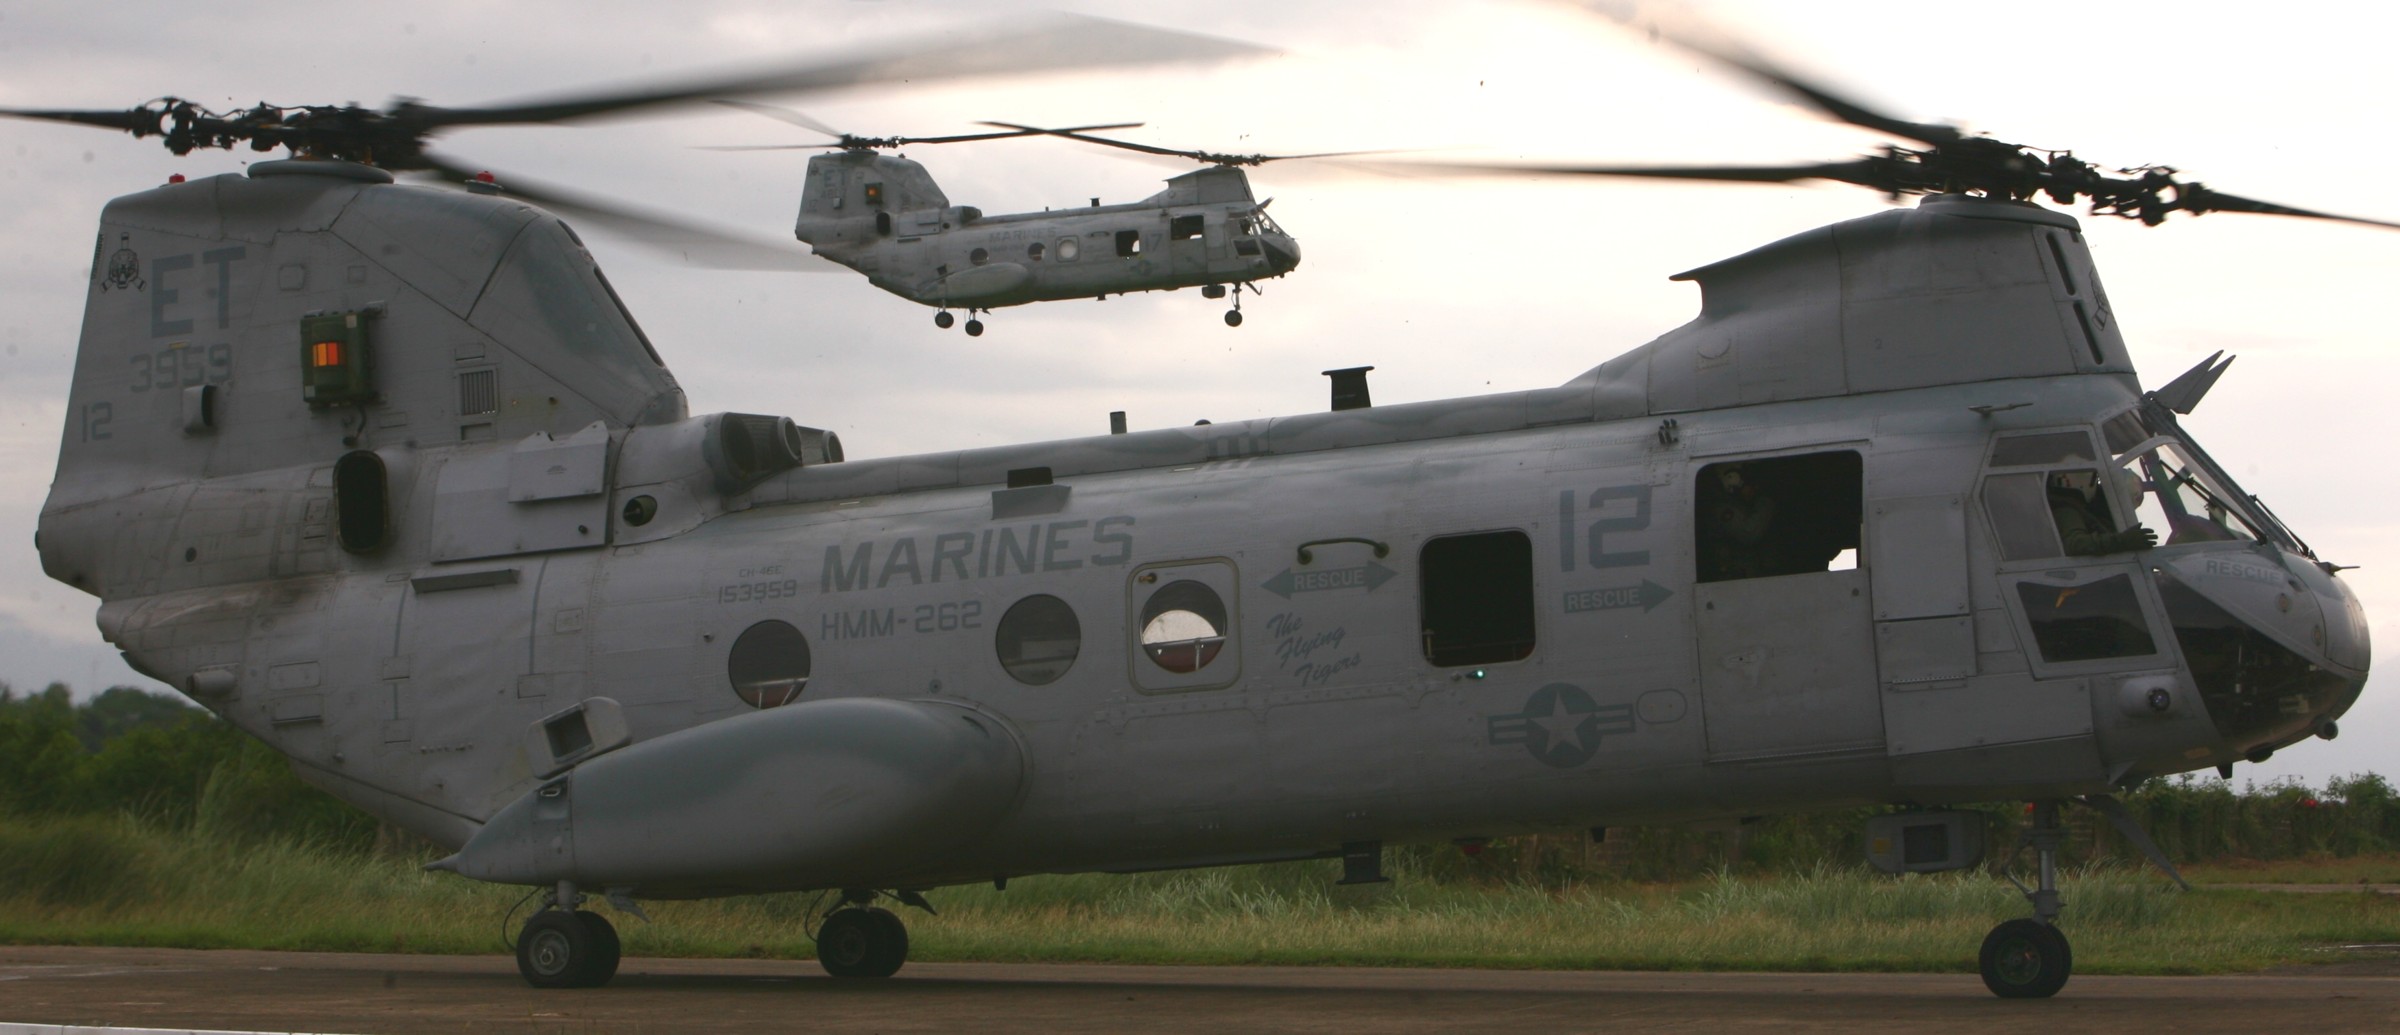 hmm-262 flying tigers ch-46e sea knight marine medium helicopter squadron usmc puerto princesa philippines 91